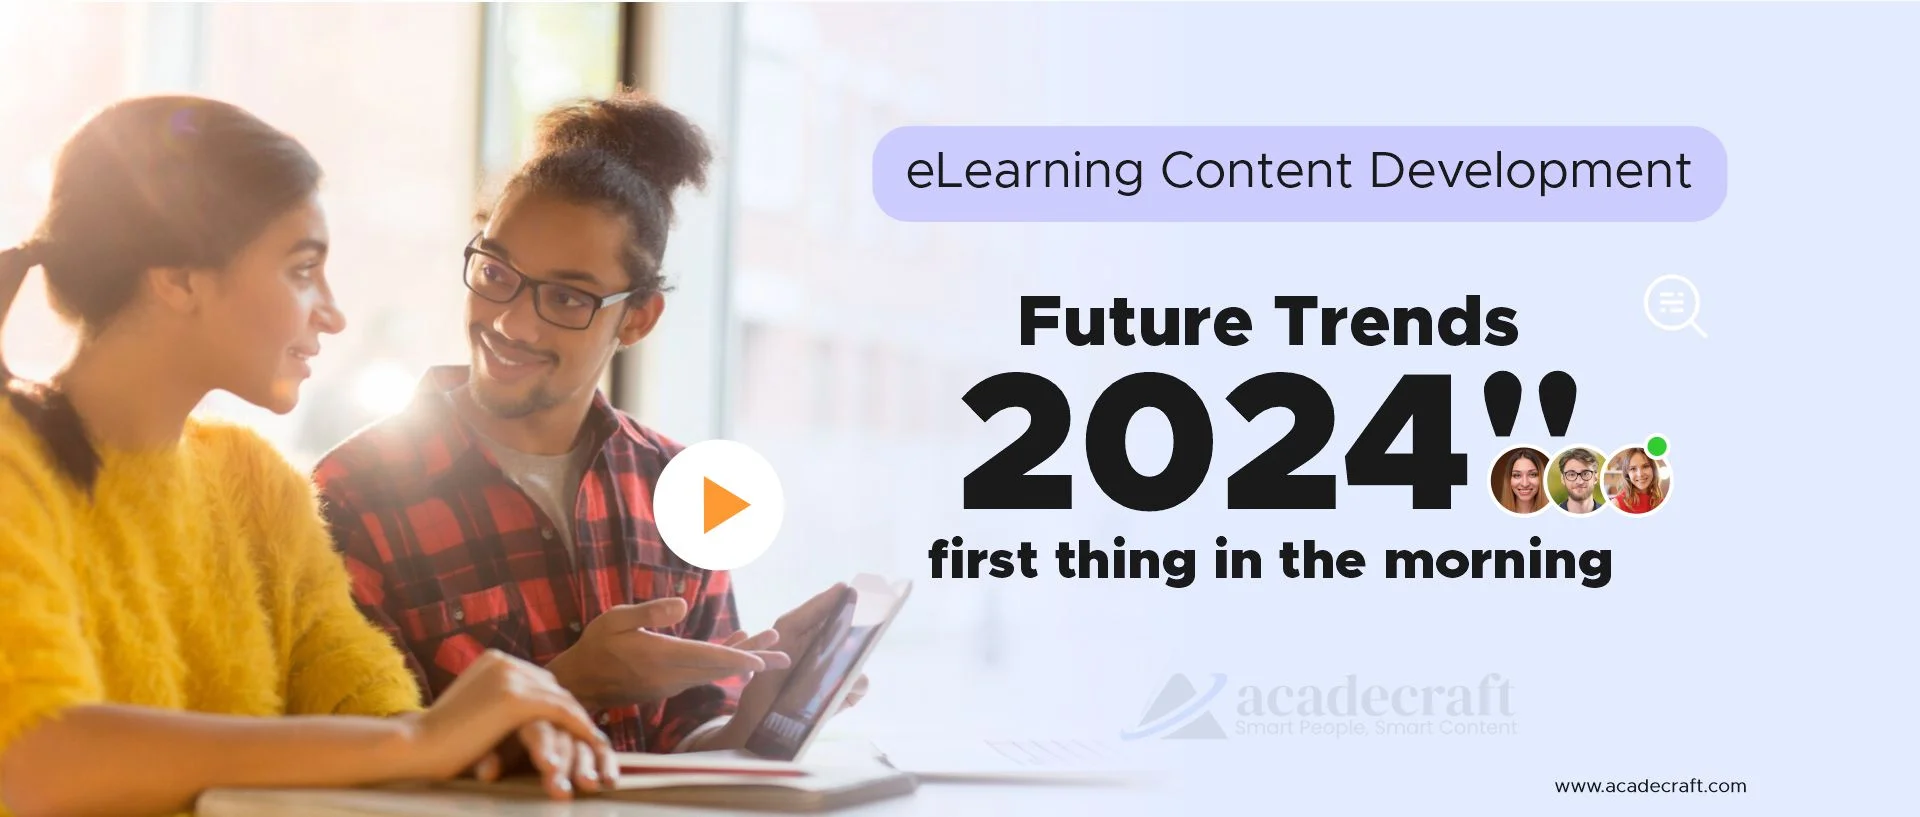 eLearning Content Development - Future Trends 2024